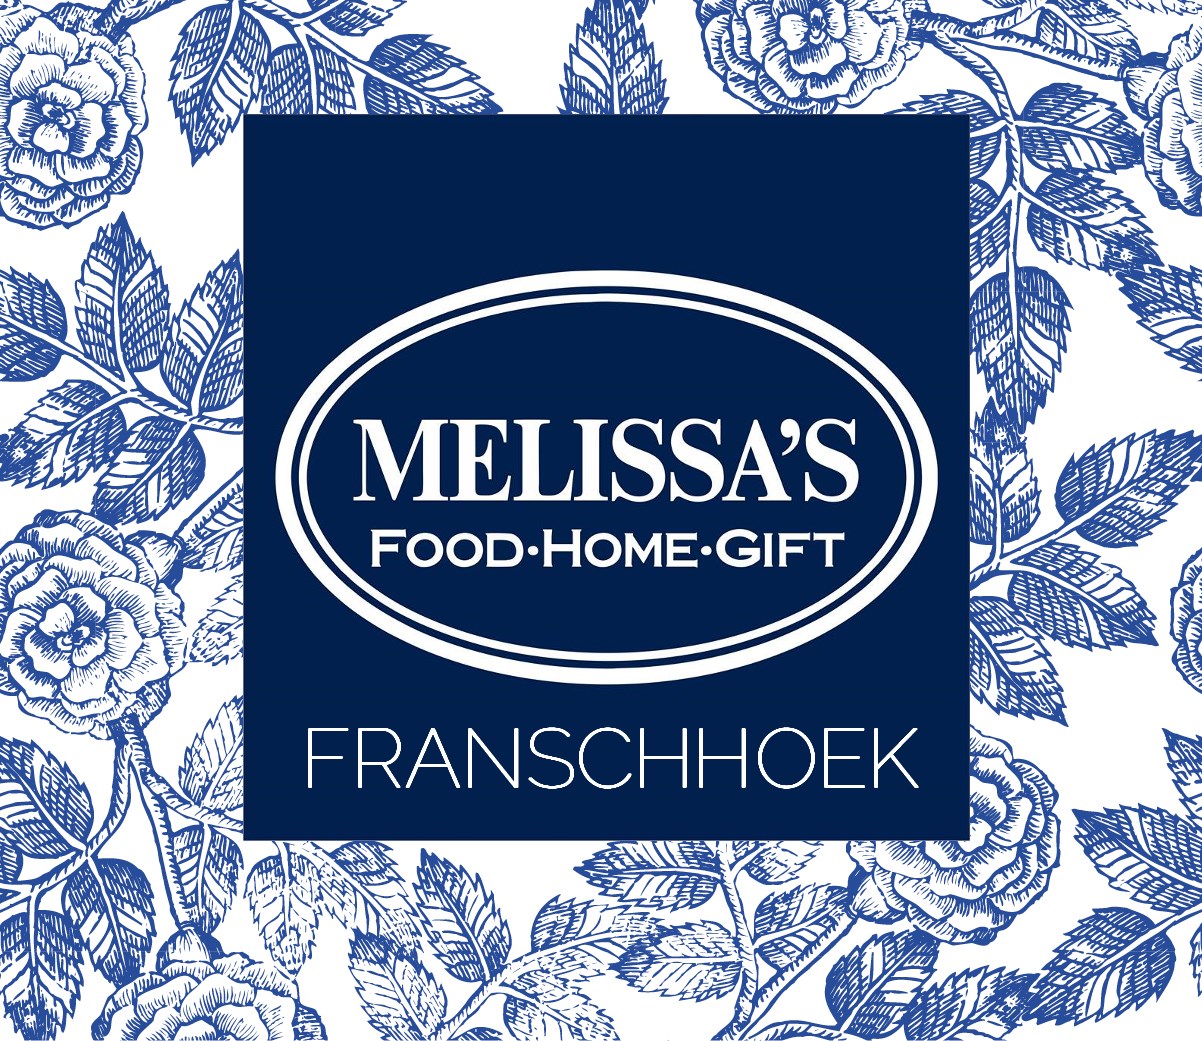 Melissa's opens in Franschhoek (CLOSED) 10